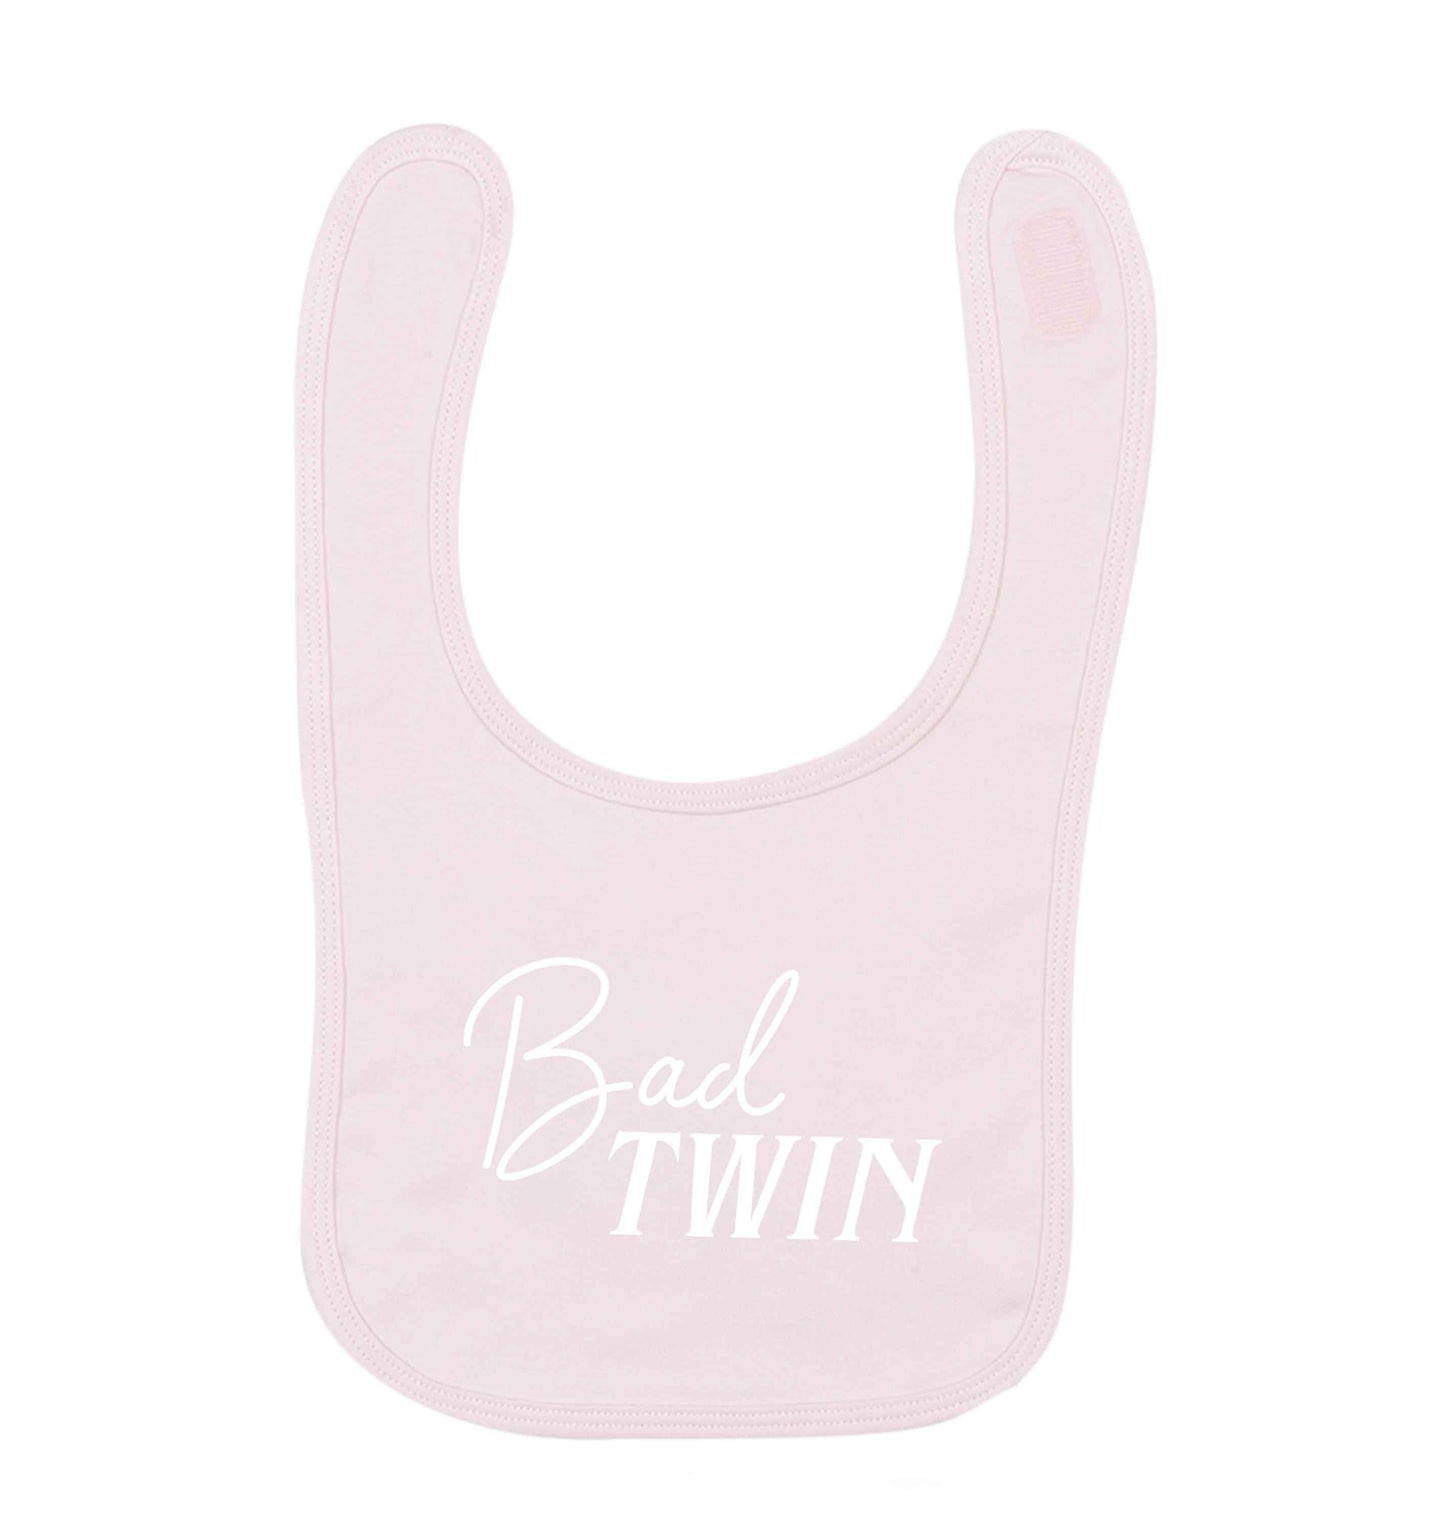 Bad twin pale pink baby bib